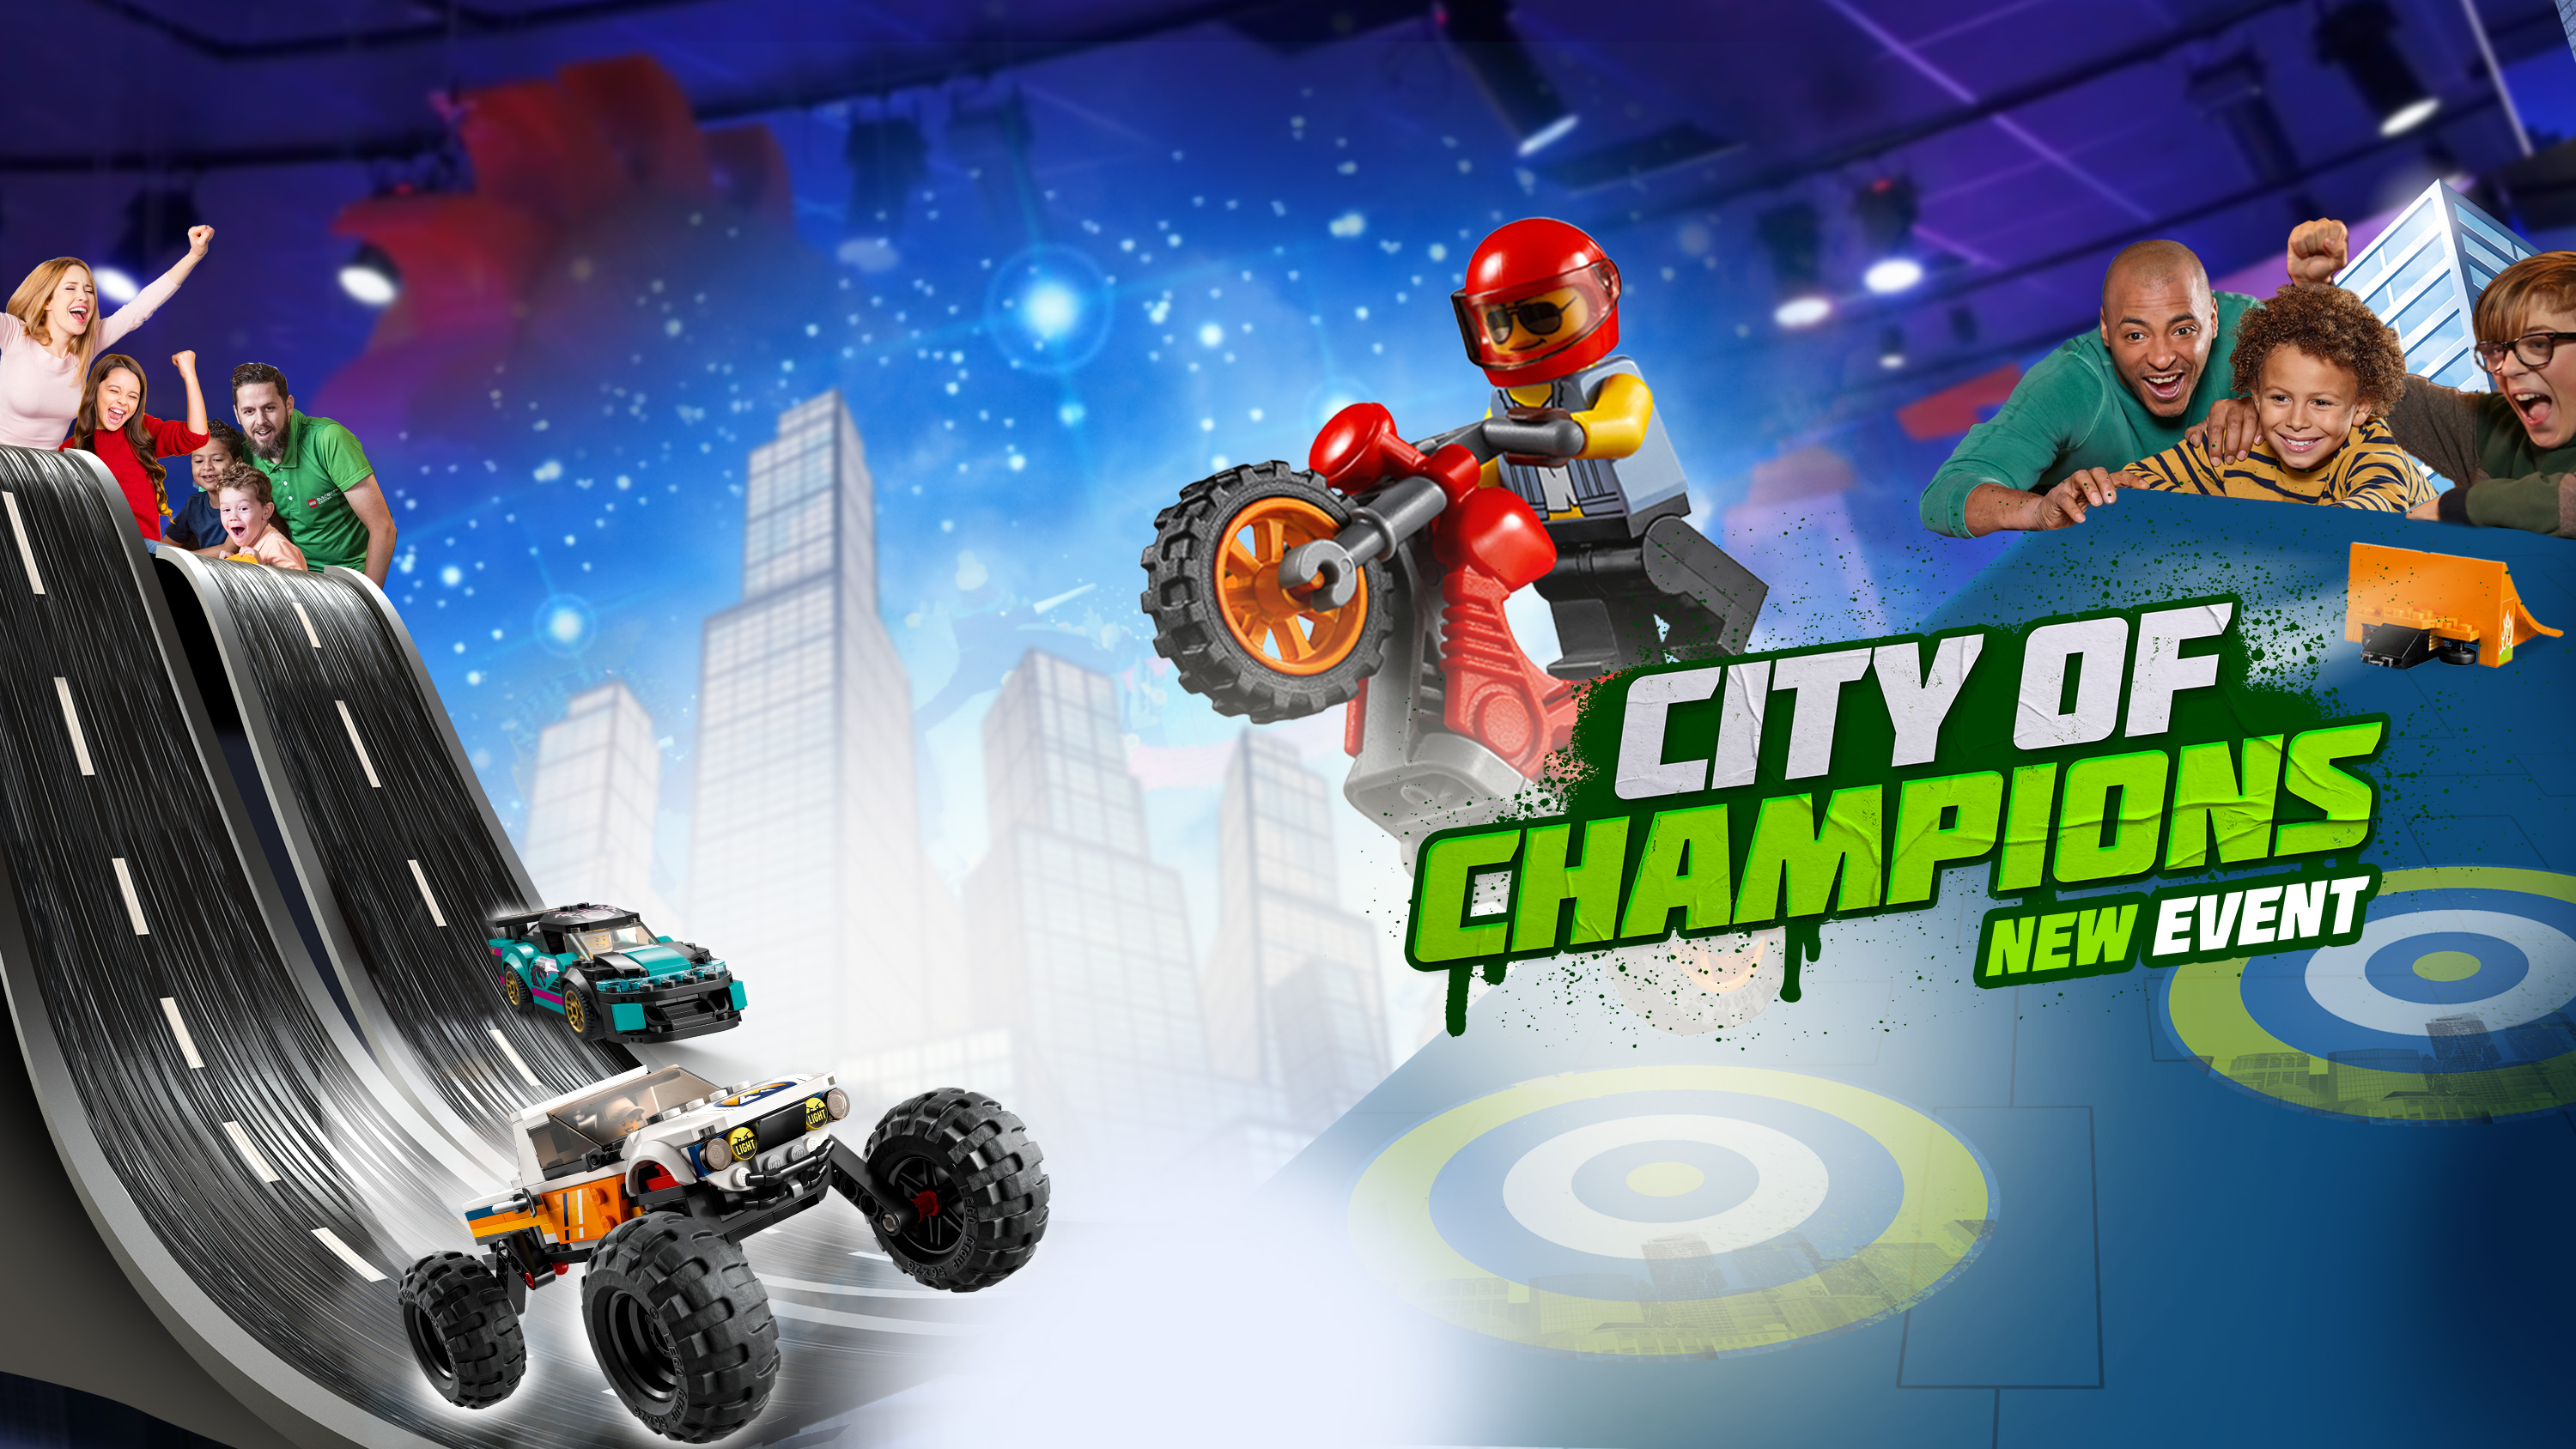 LEGO City of Champions! 